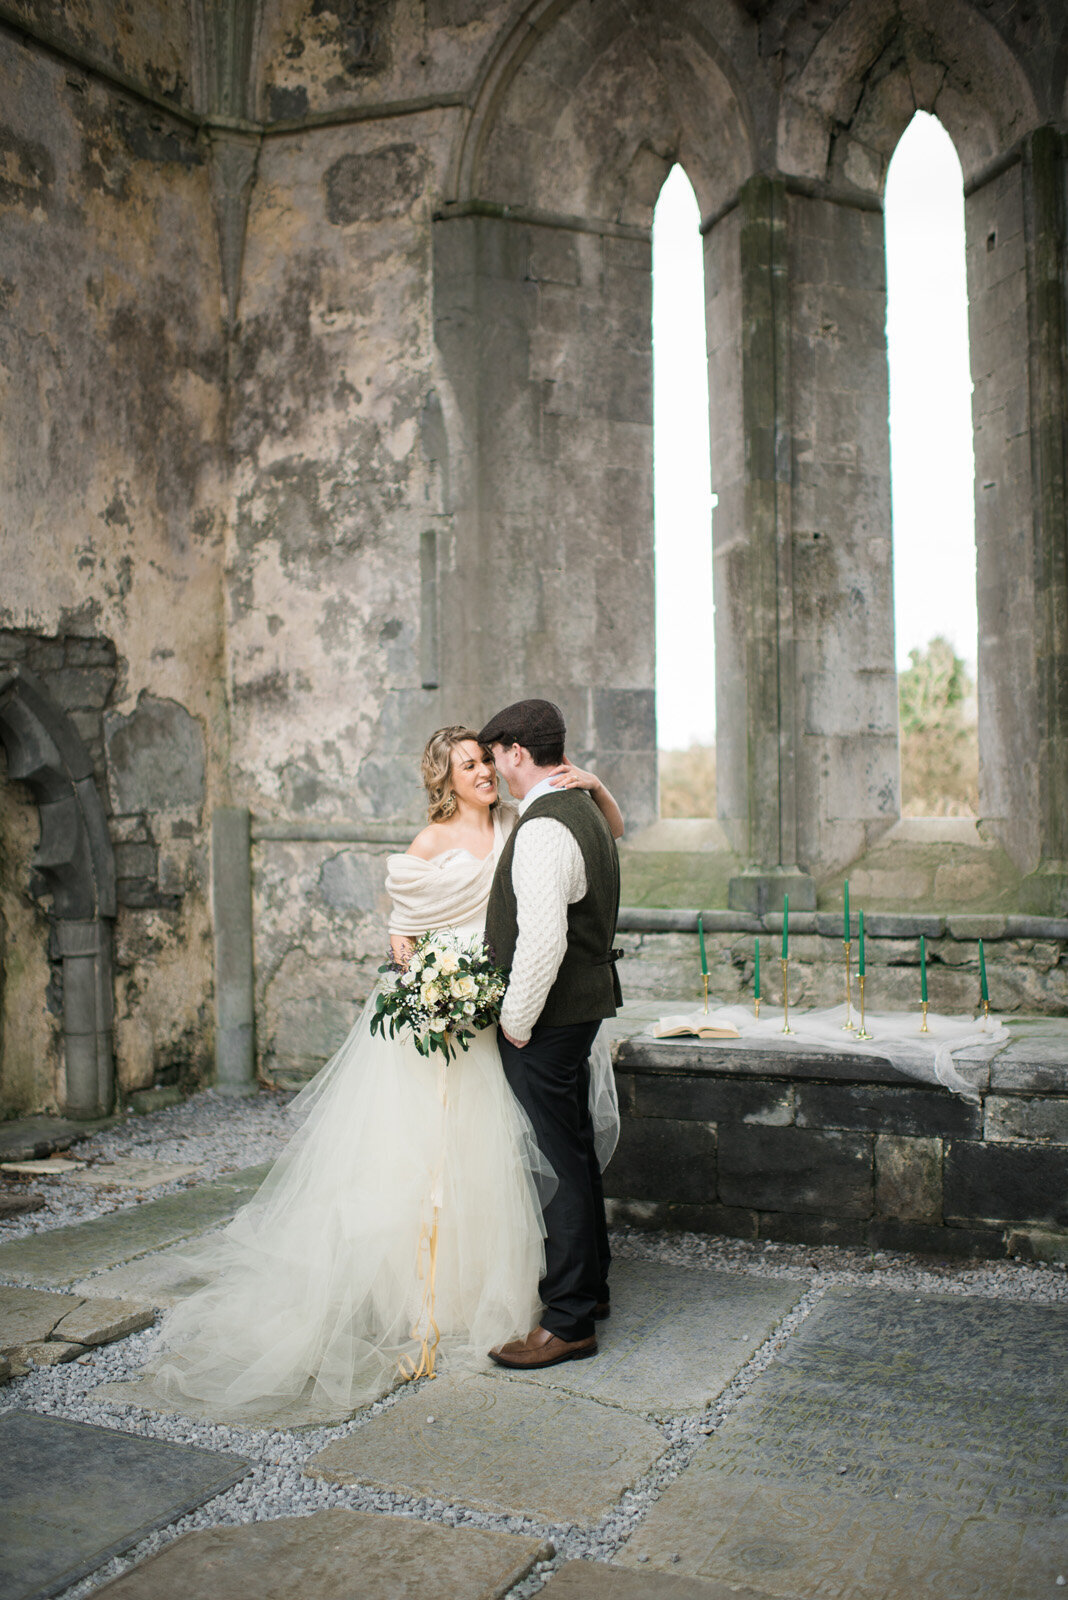 Kate-Murtaugh-Events-Ireland-international-destination-wedding-planner-altar-Irish-stone-castle